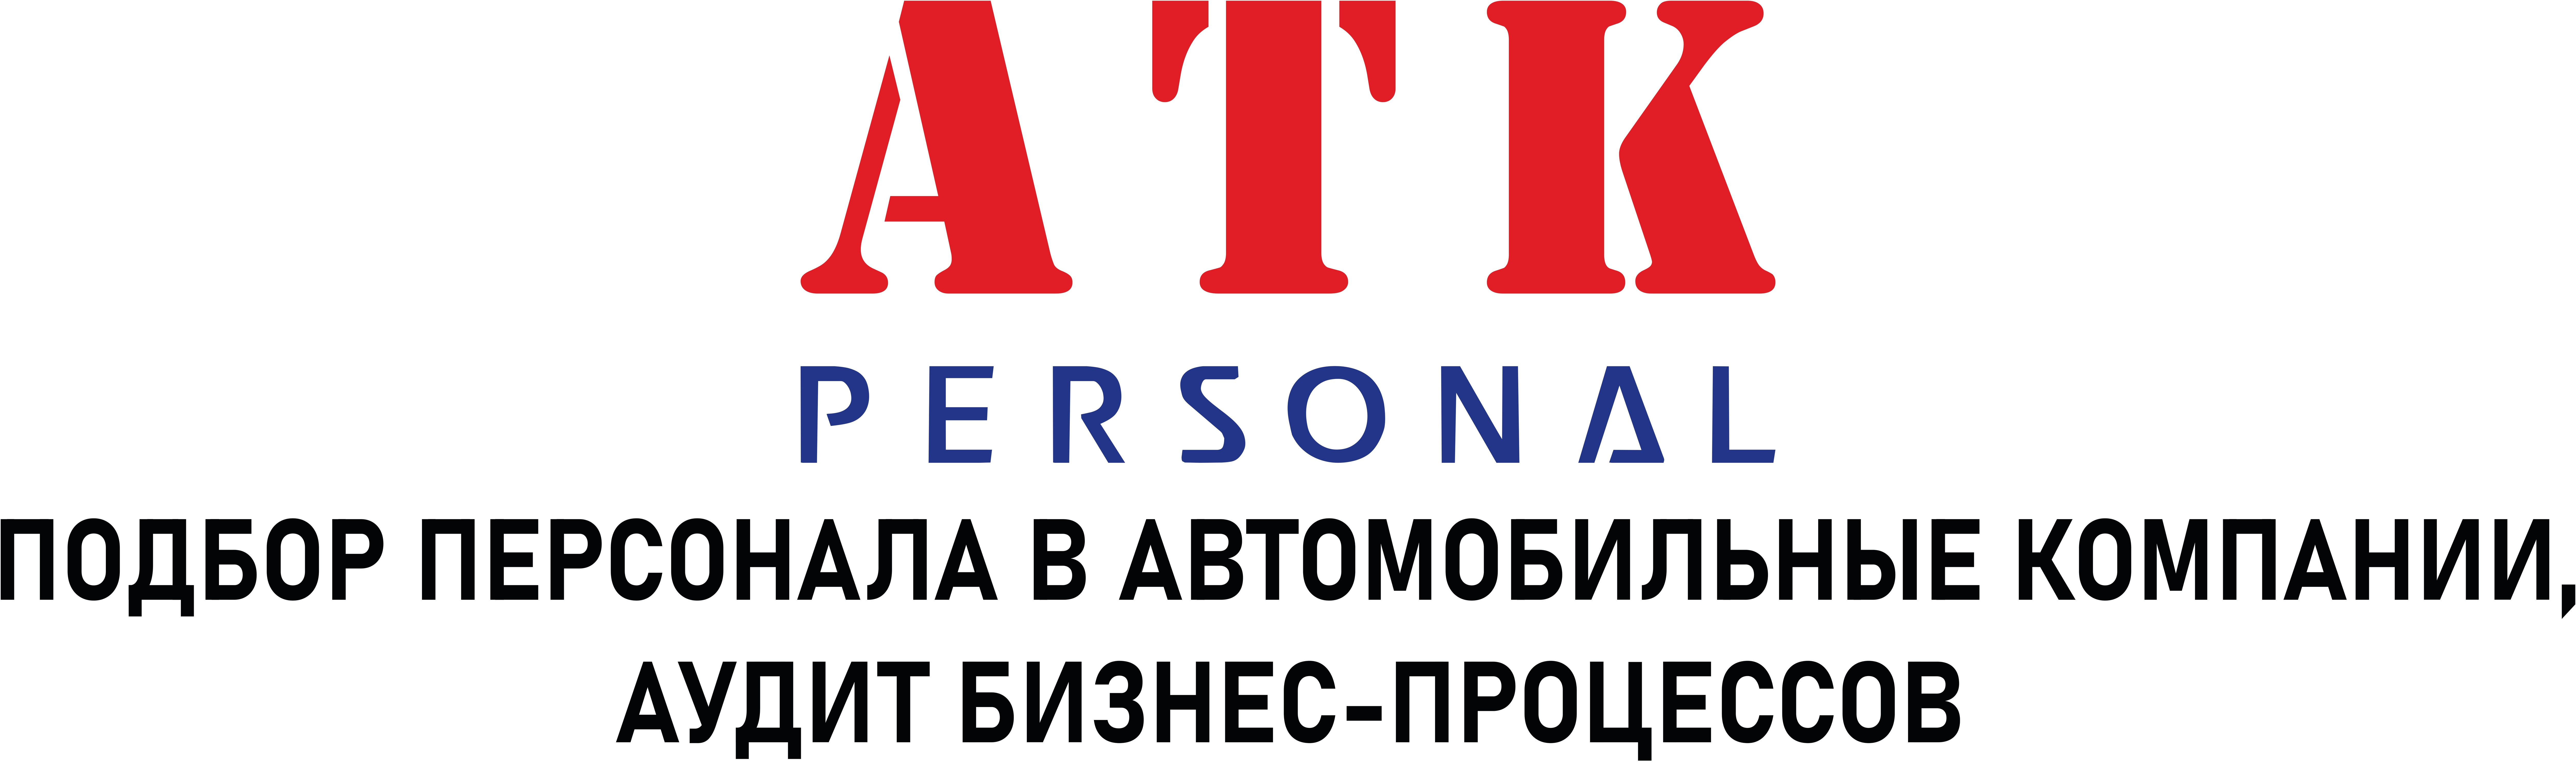 ATK-PERSONAL Logo